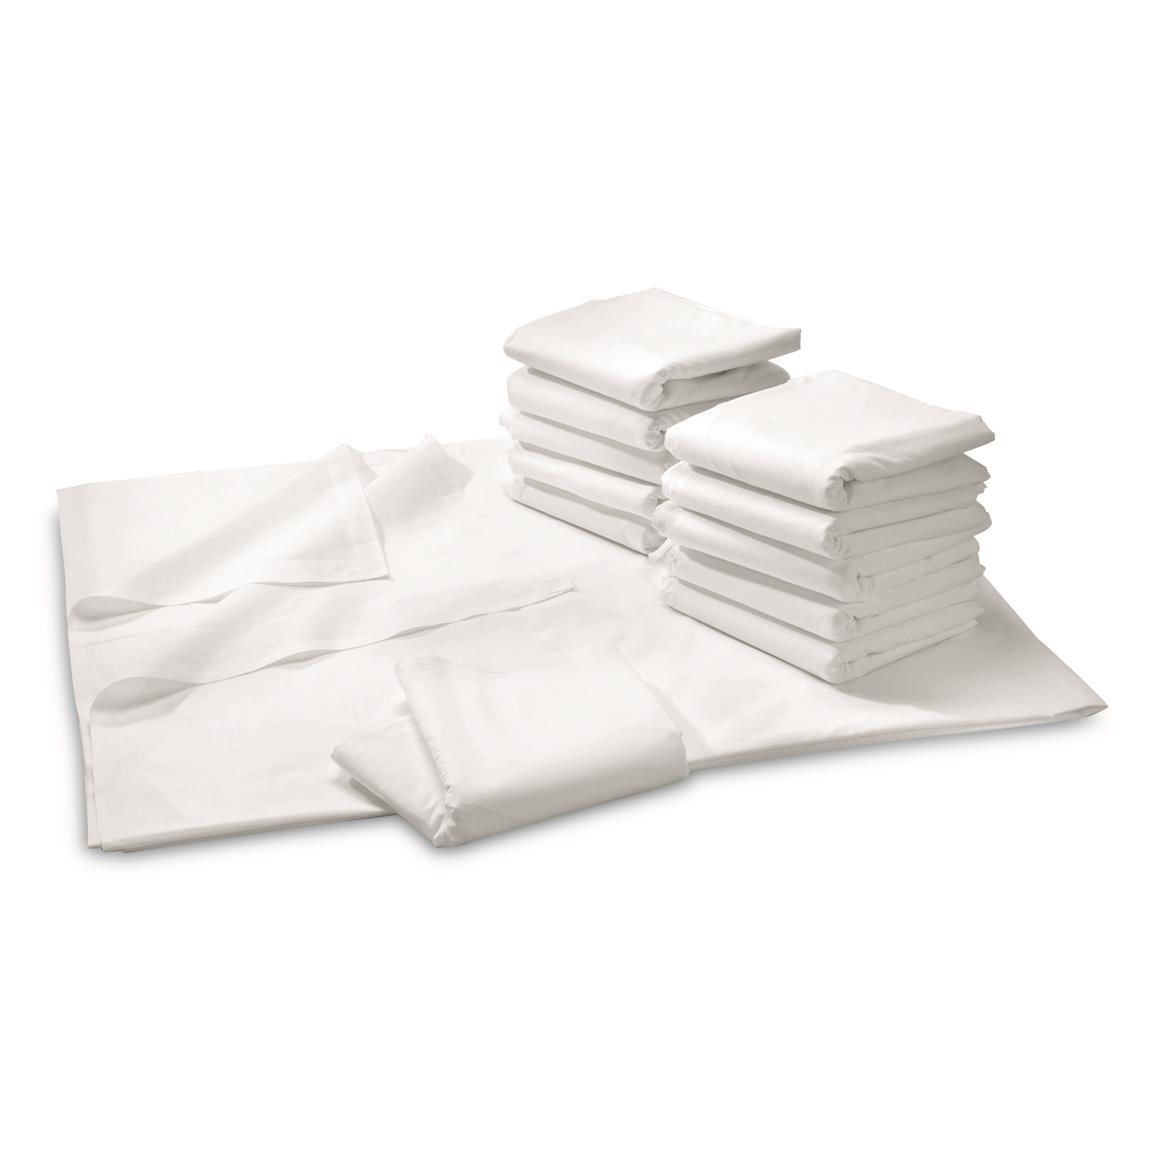 U.S. FEMA Surplus Bed Sheets, 12 Pack, New, White